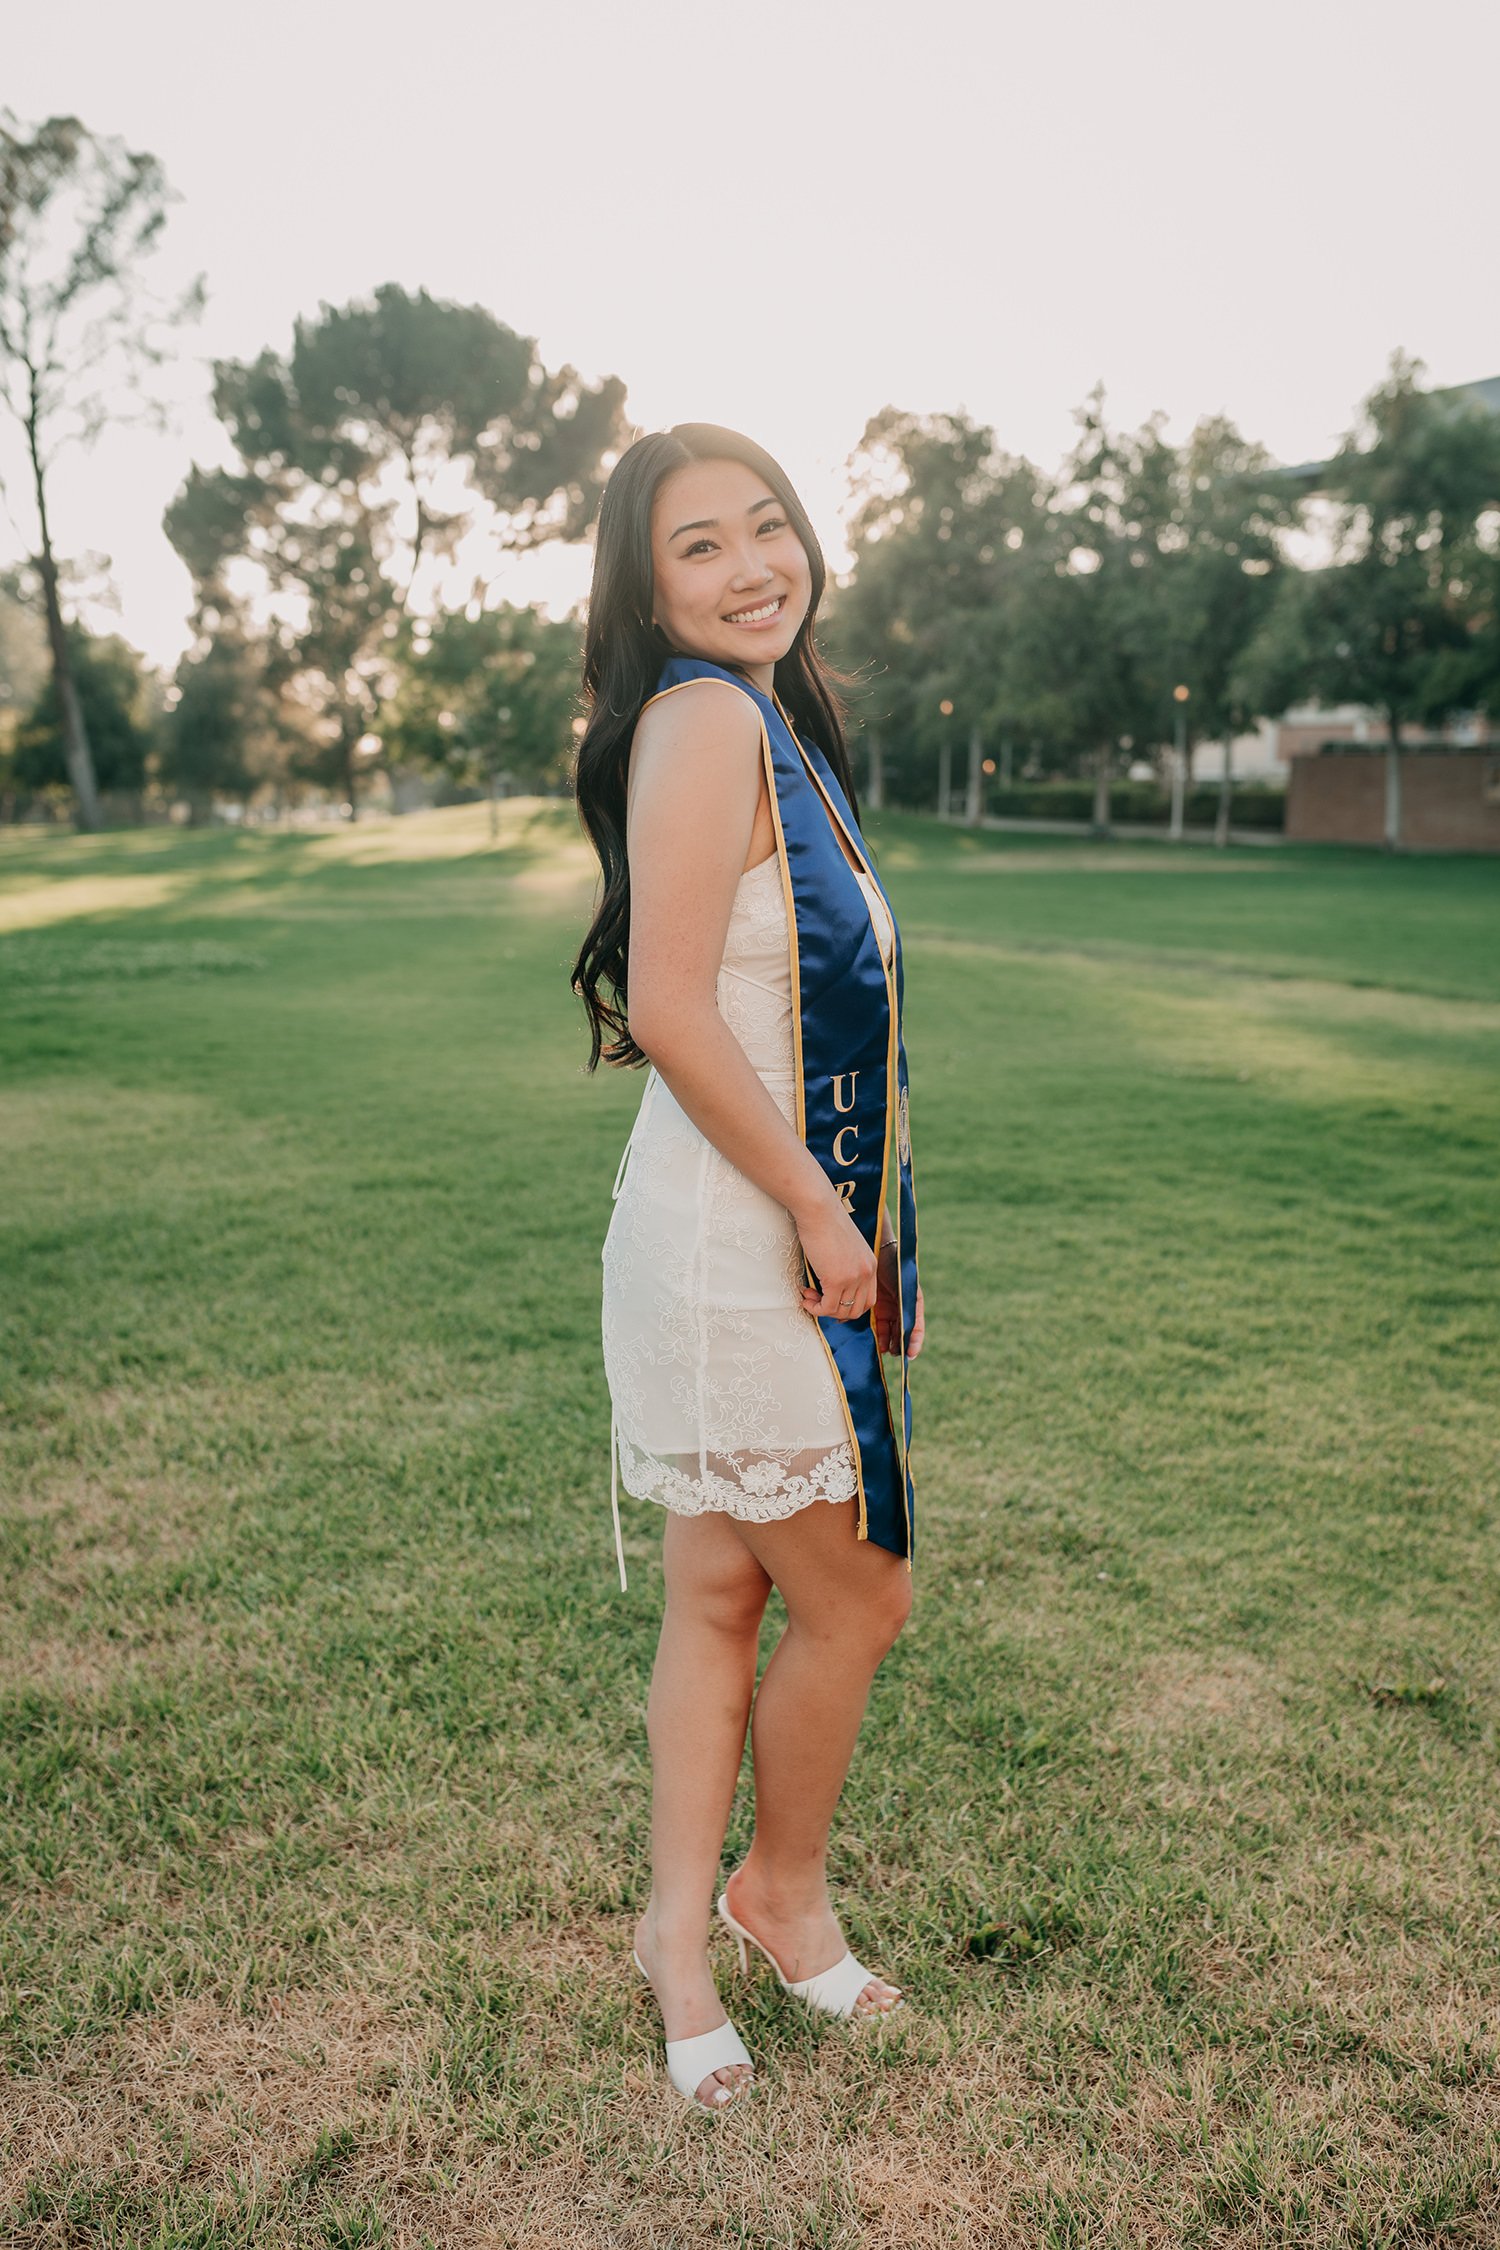 ucr-graduation-portrait-riverside-california-photographer-24.jpg